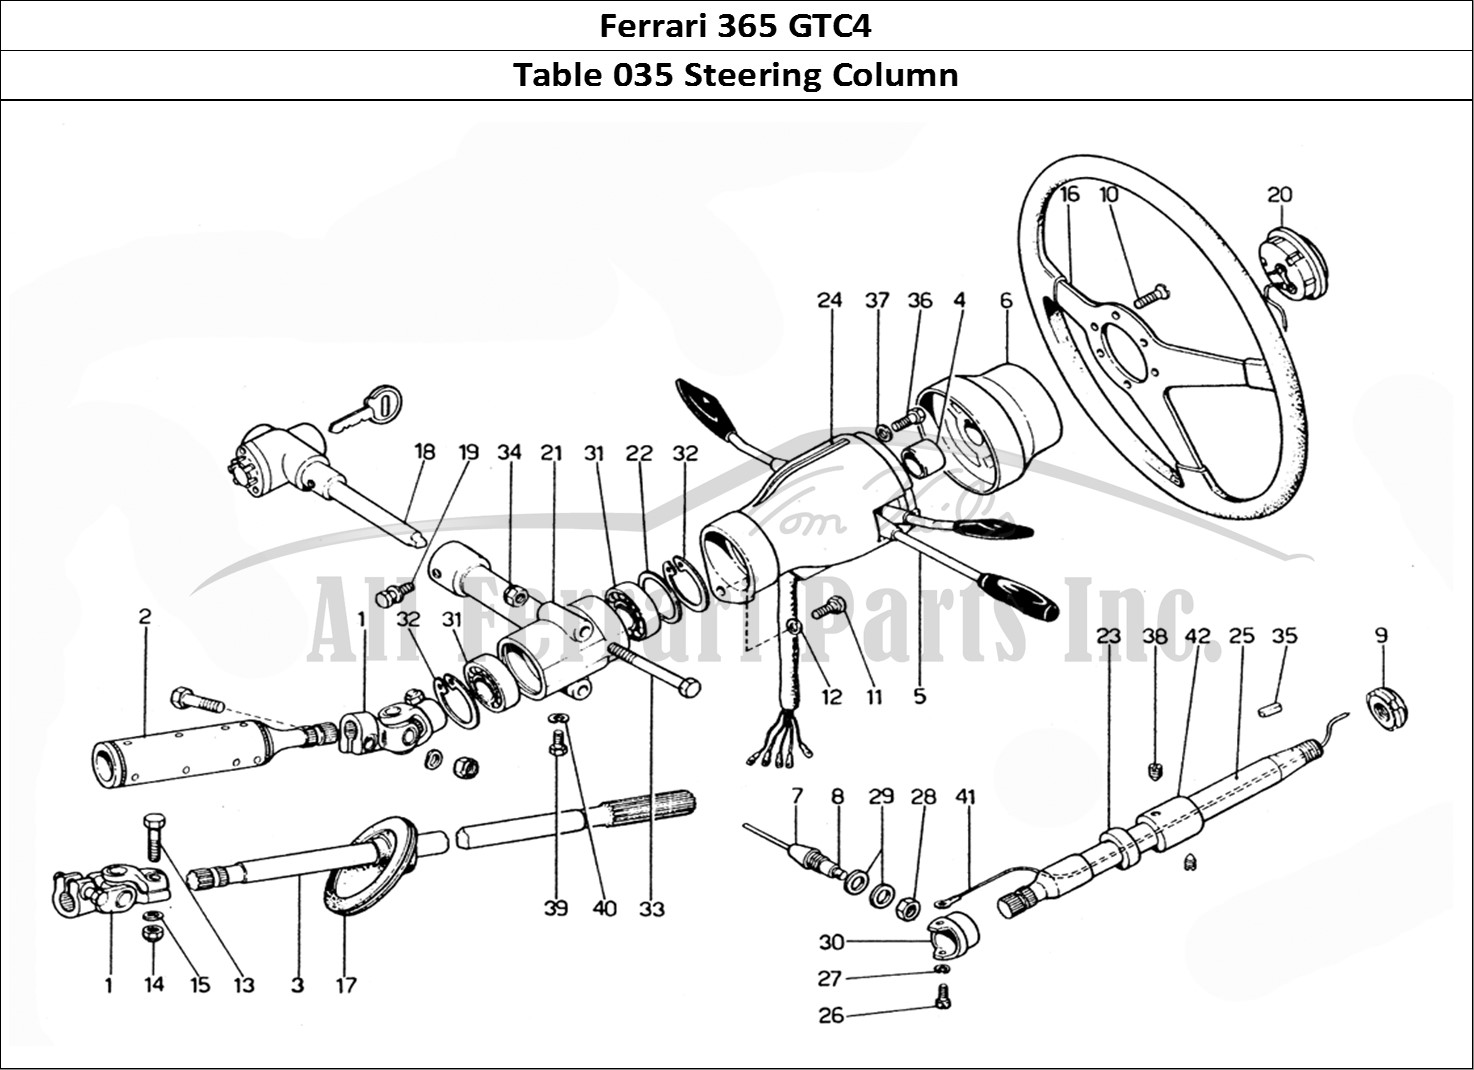 Ferrari Parts Ferrari 365 GTC4 (Mechanical) Page 035 Steering Colume